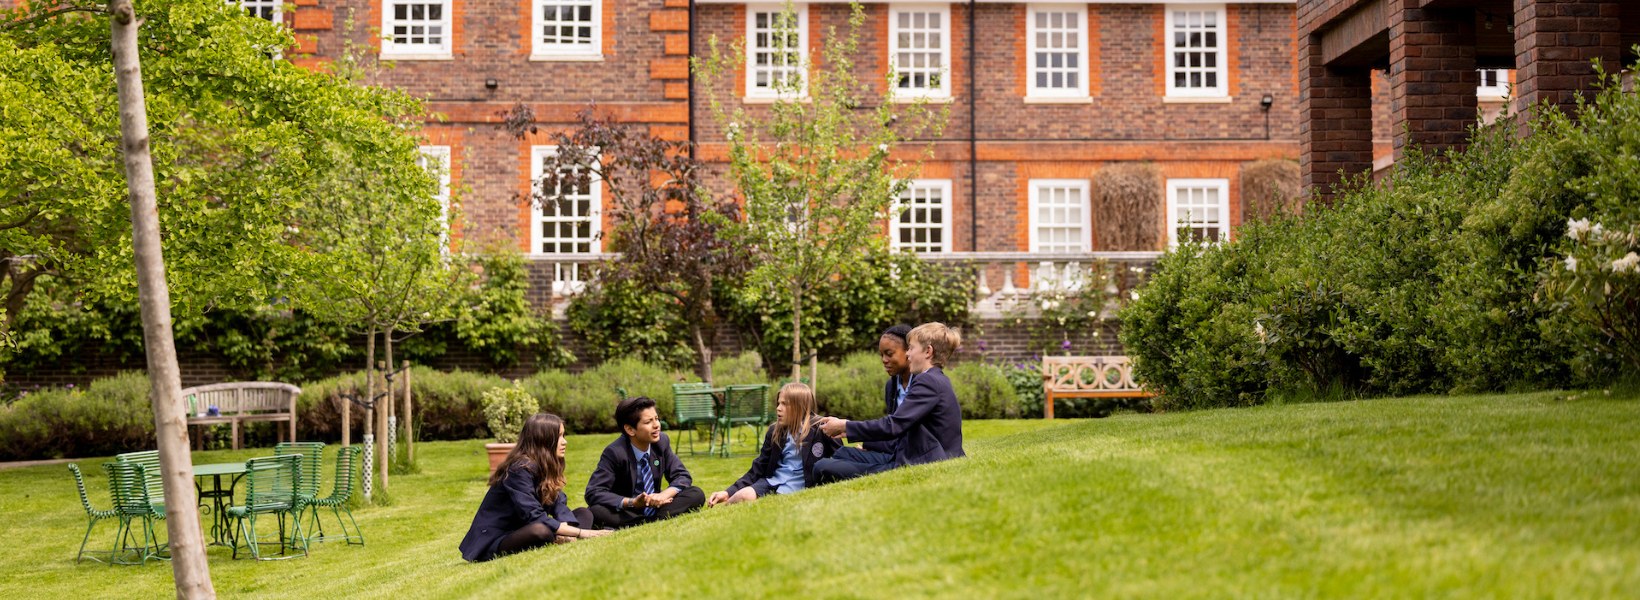 Pupils of Ibstock Place School sitting in the garden.